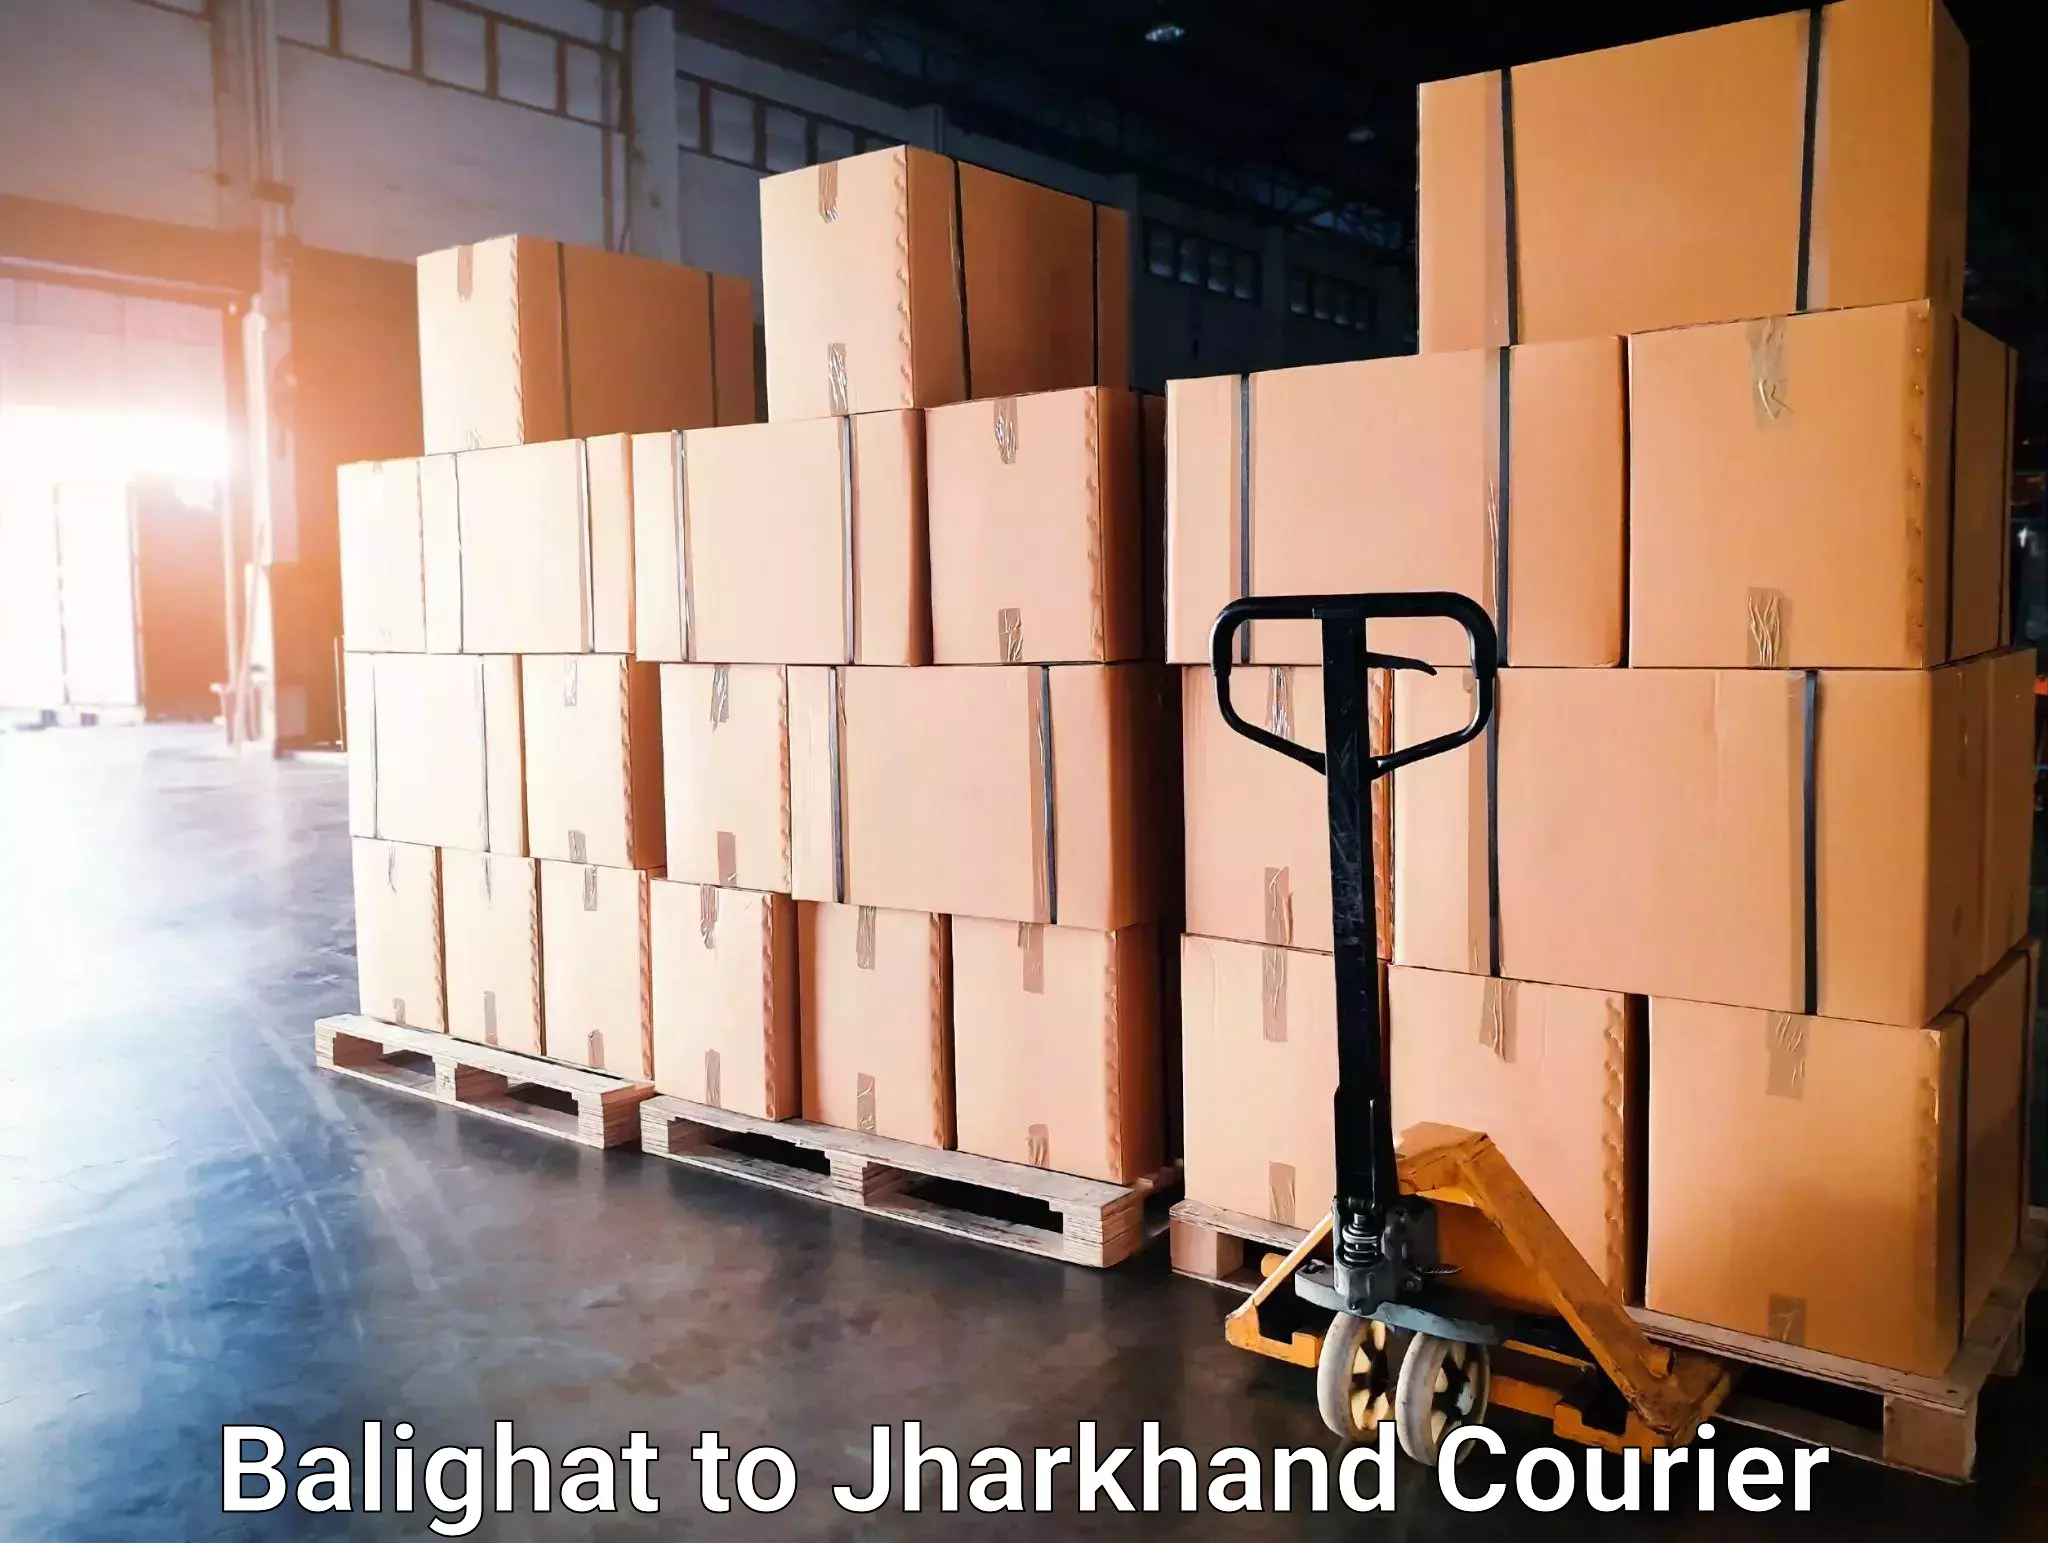 On-demand courier Balighat to Bokaro